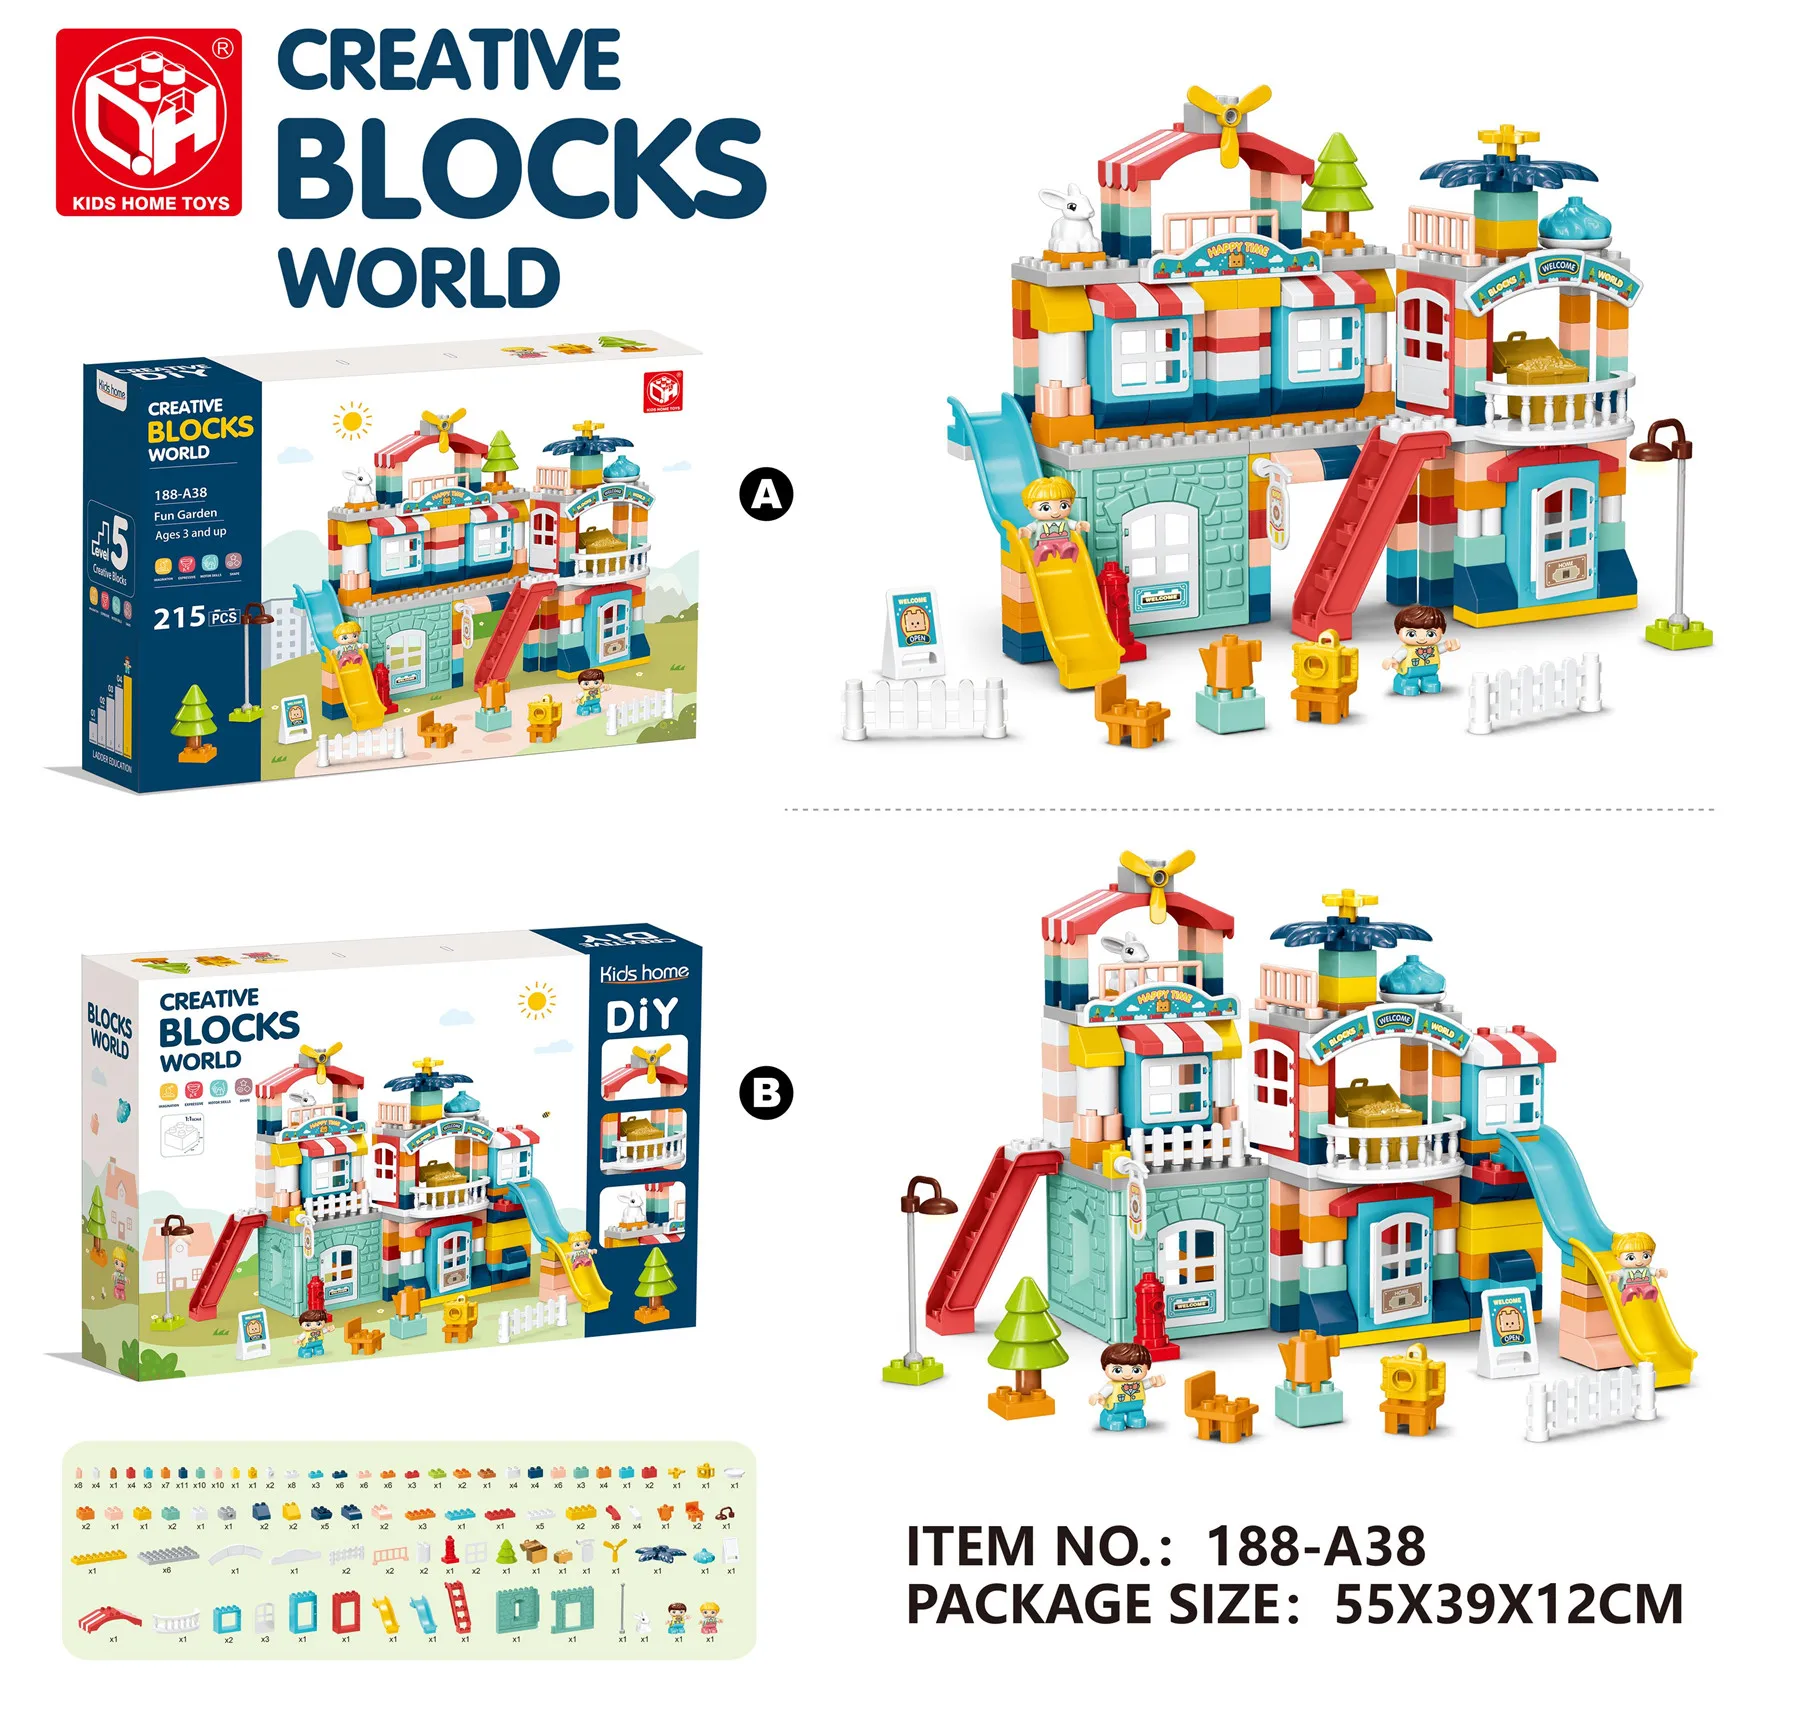 House Building Blocks for Kids who want to Change the World – Globalshiksha